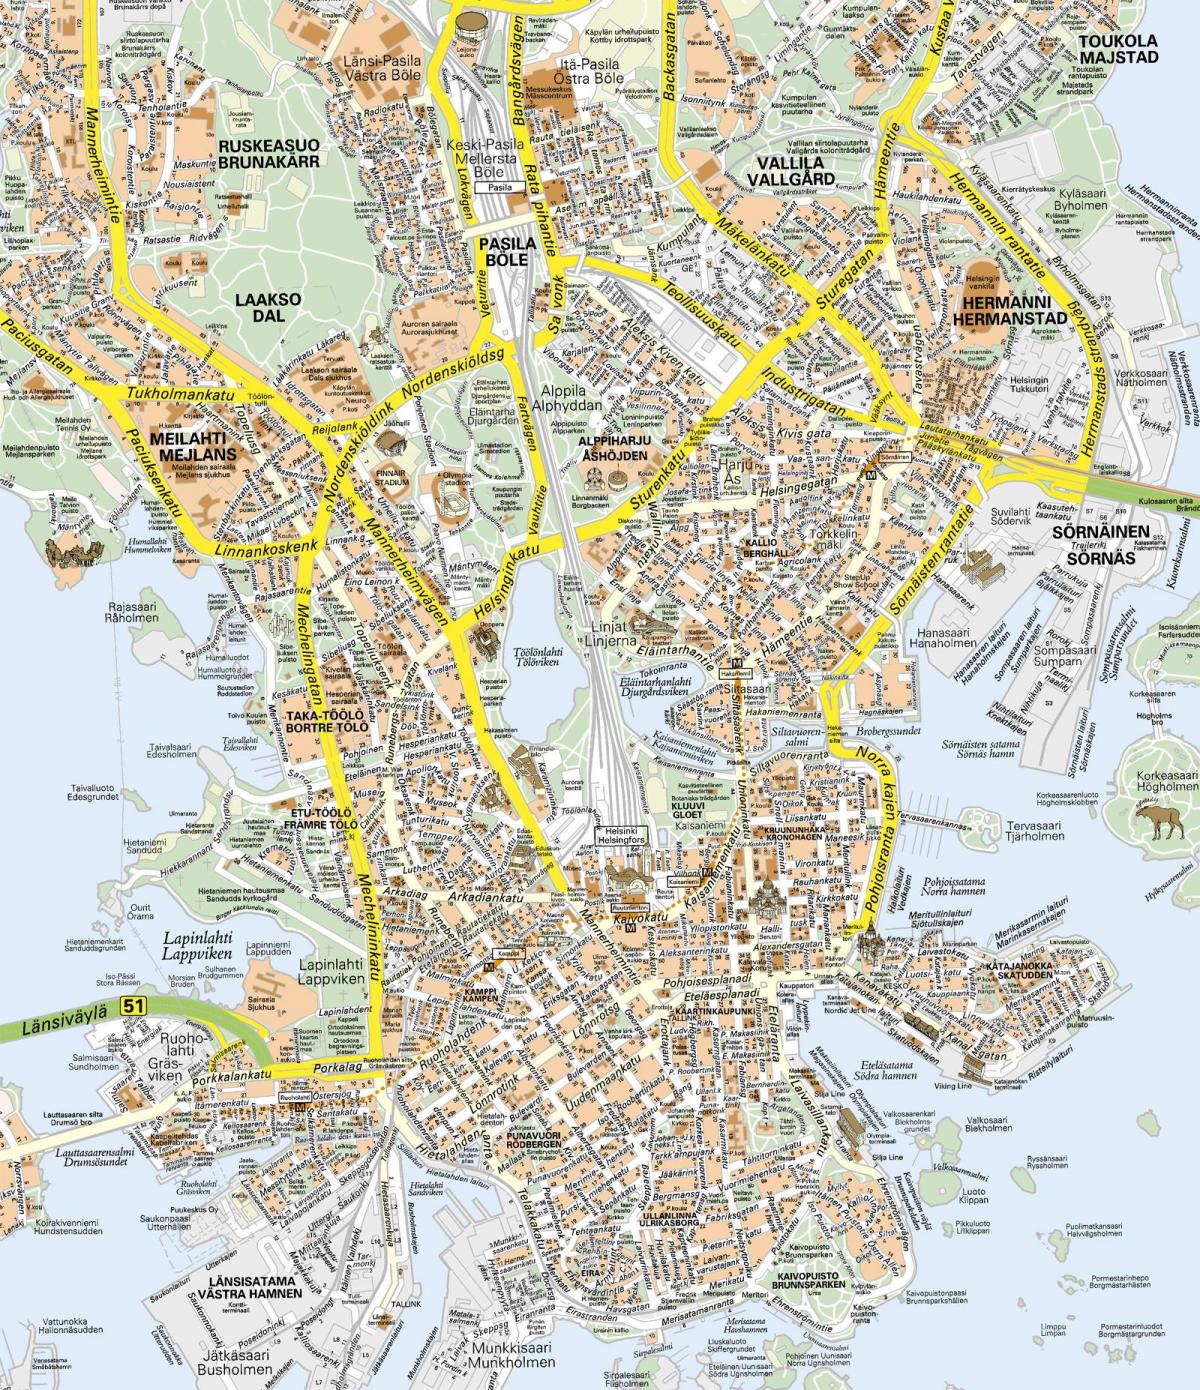 Helsinki city center map